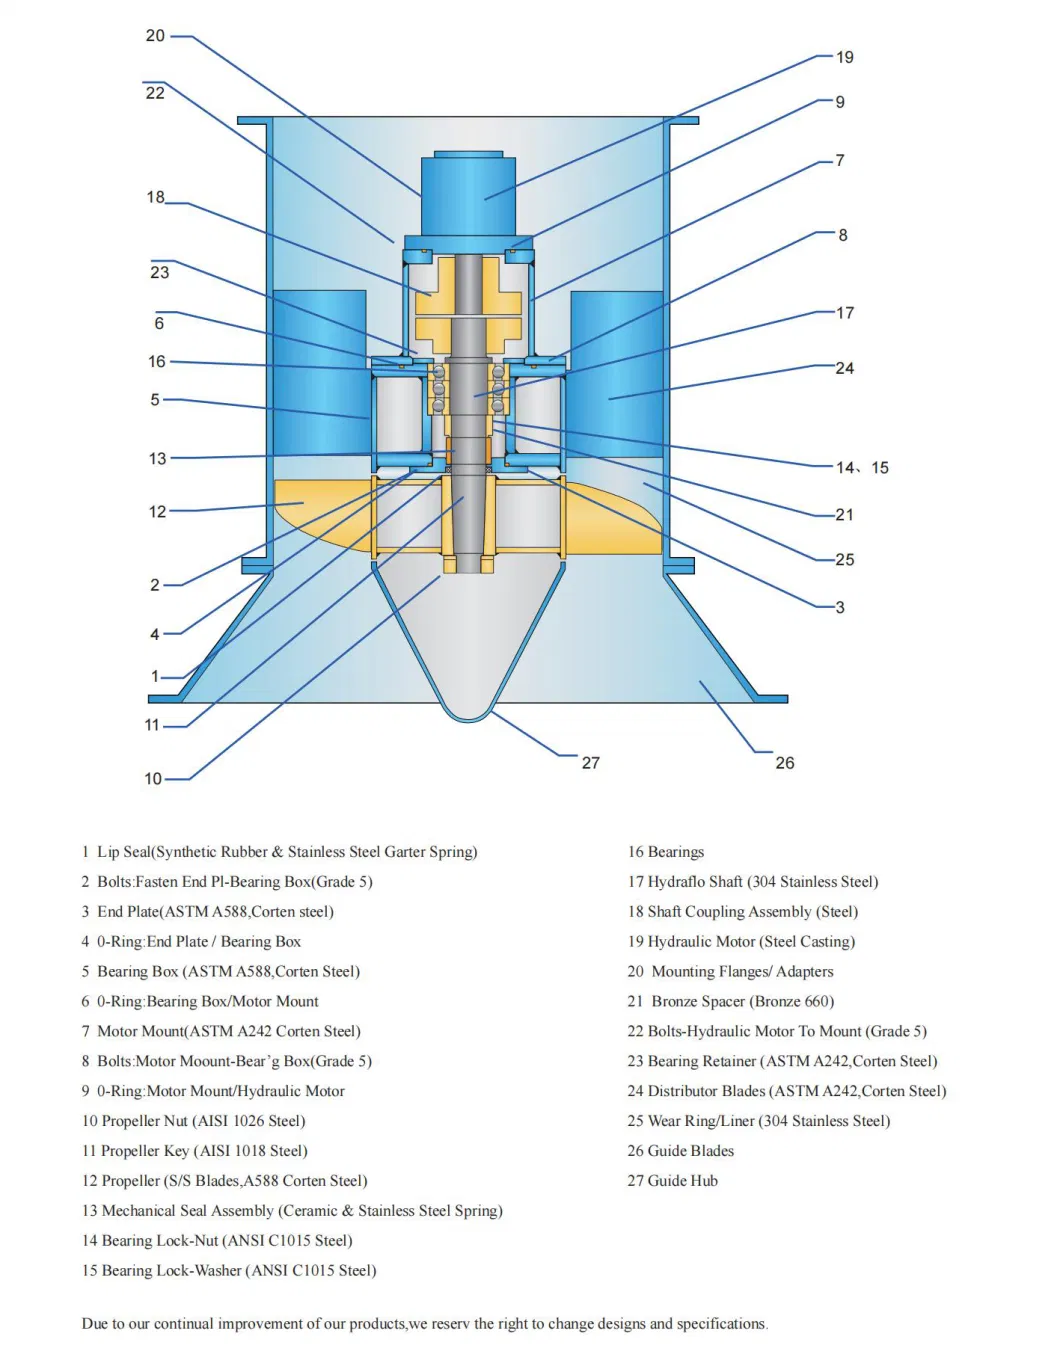 Tkflo Industrial Large Flow Hydraulic Electric Motor Submersible Slurry Mining Water Pump